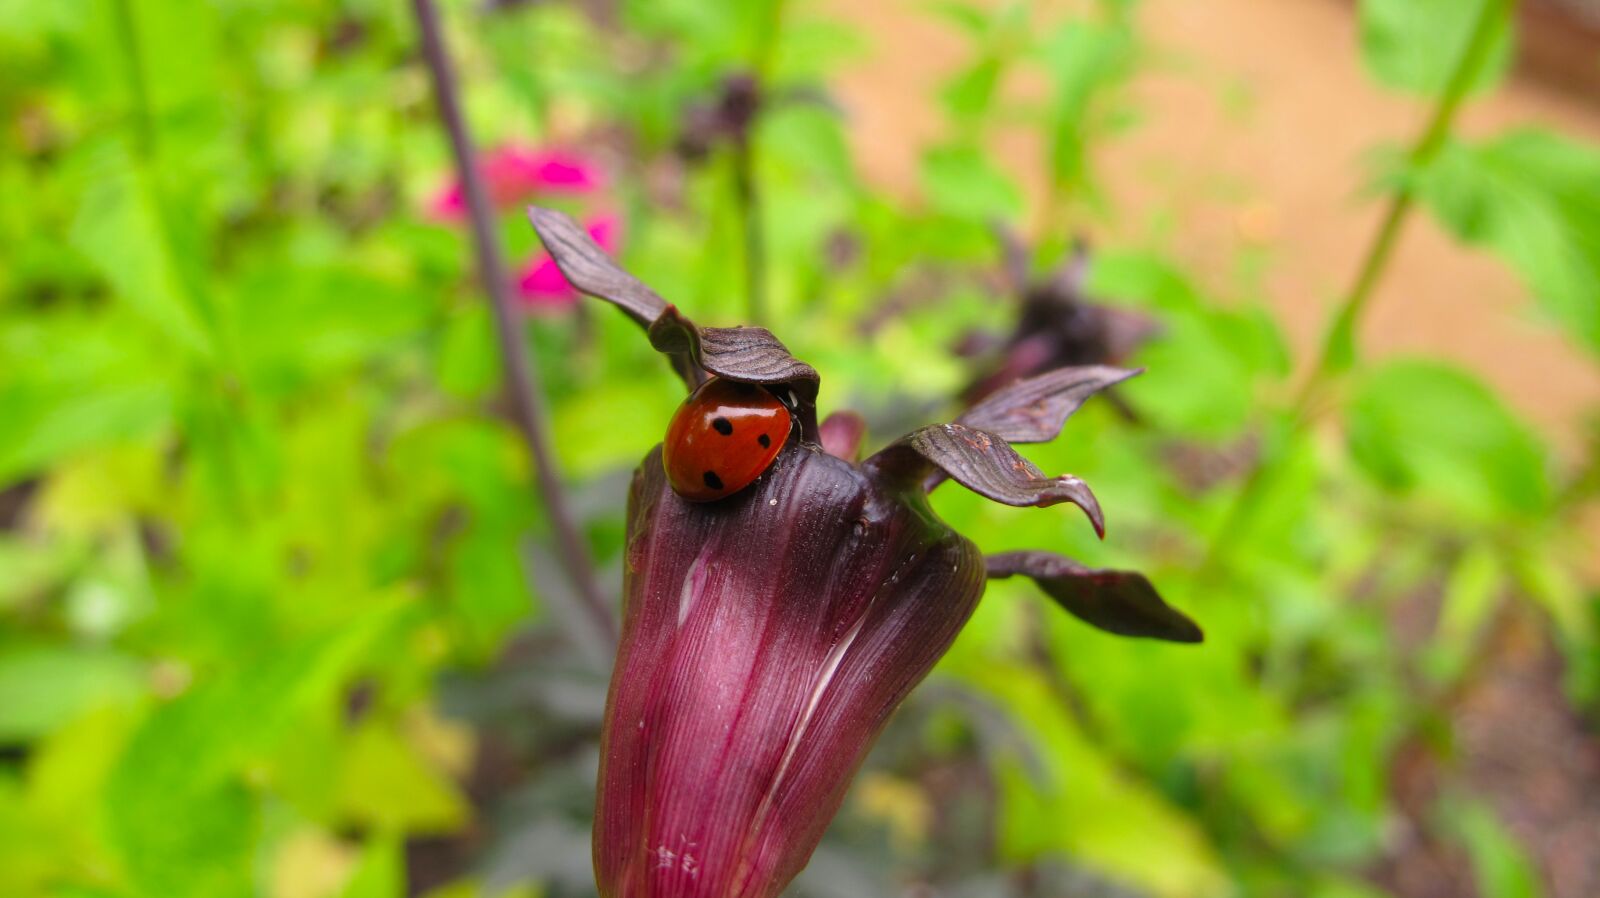 6.1 - 30.5 mm sample photo. Ladybug, nature, green photography